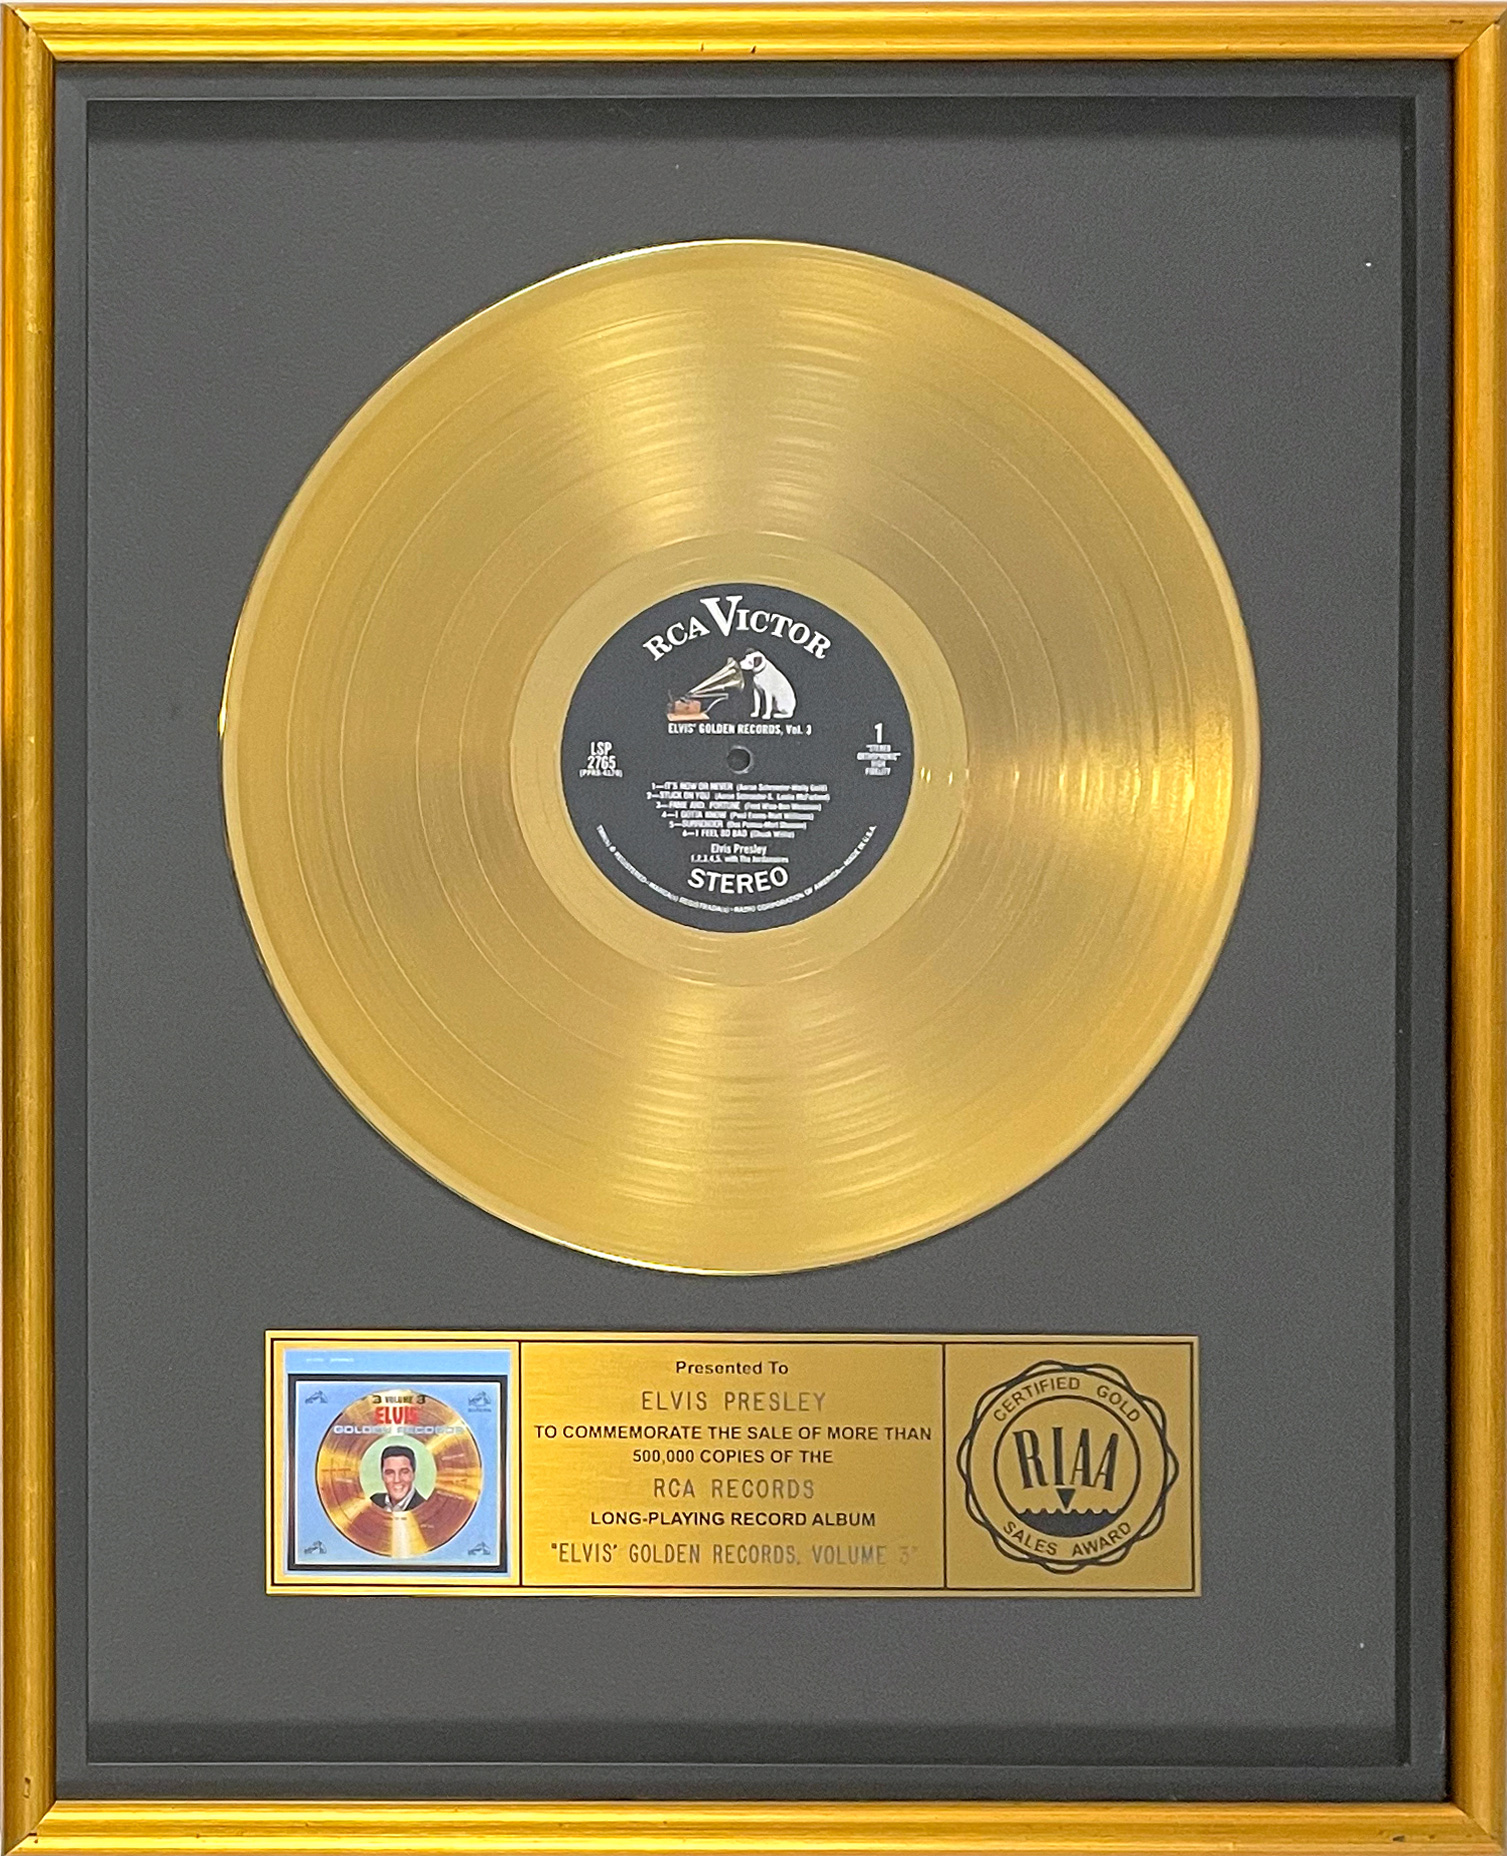 Elvis' Golden Records Volume 3 - Wikipedia